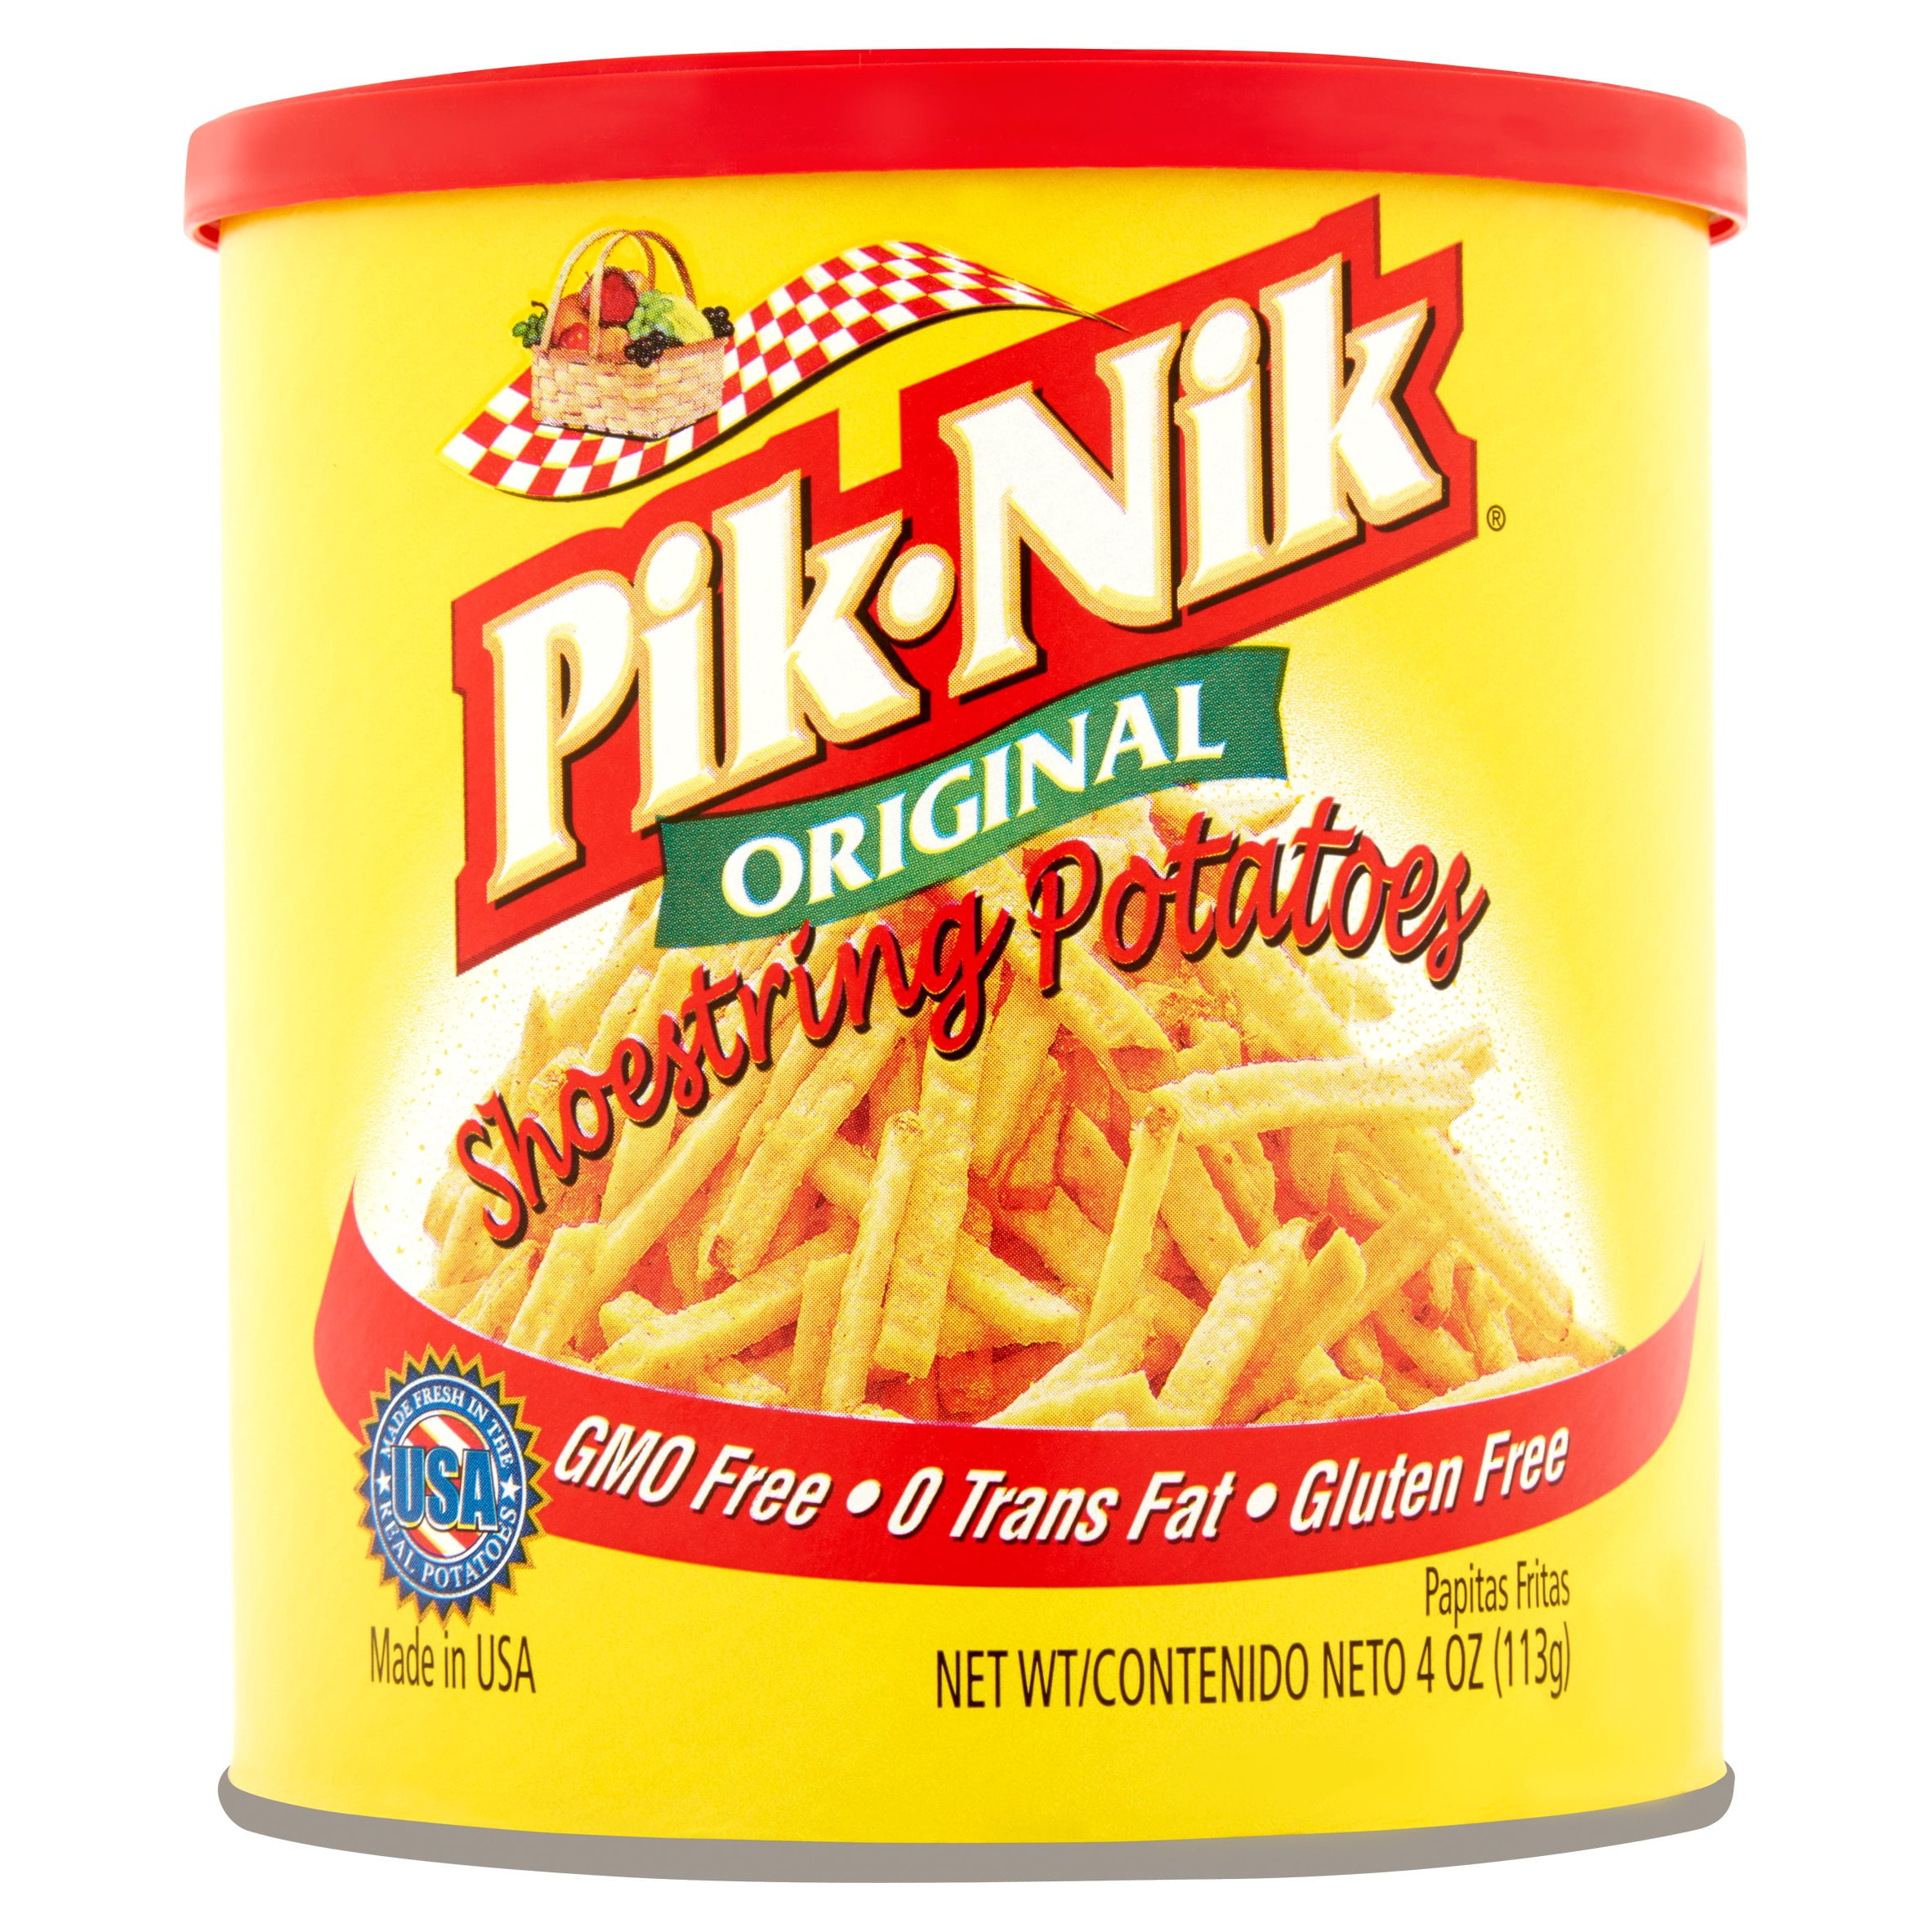 Pik-Nik Original Shoestring Potatoes, 4 oz 